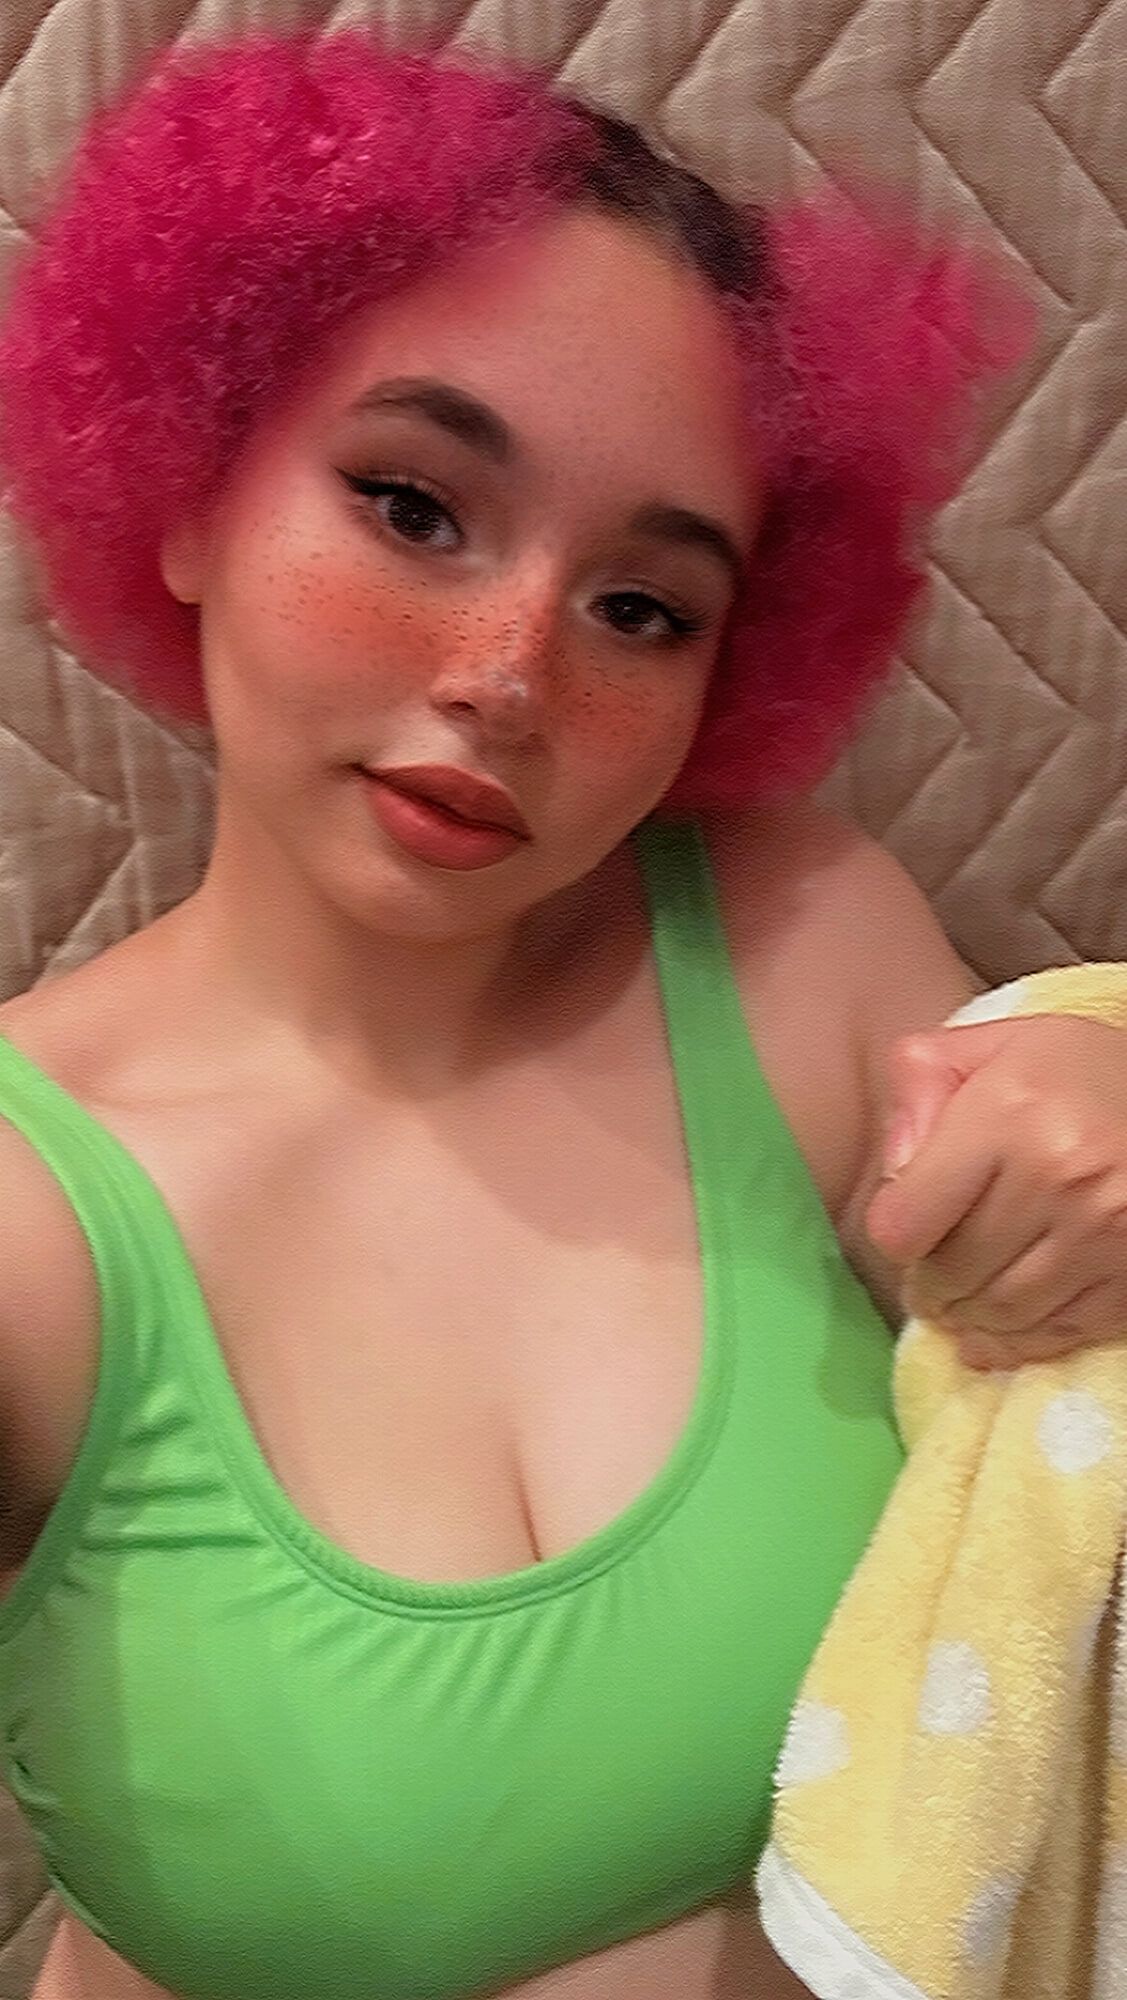 Cute chubby pink hair slut 